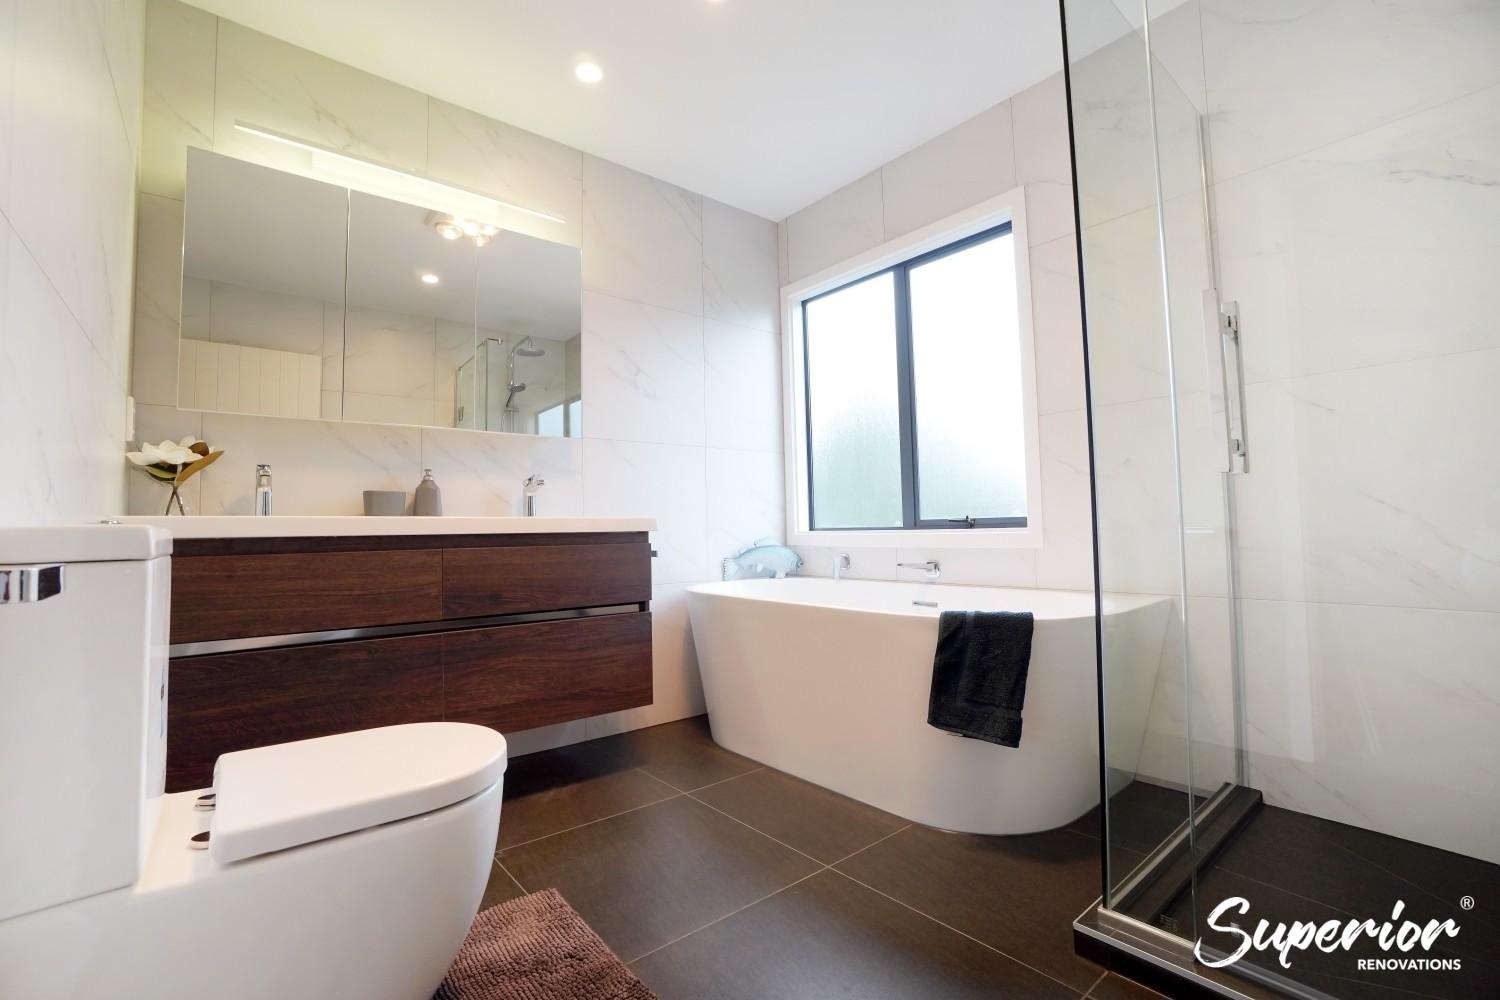 DSC00260, Kitchen Renovation, Bathroom Renovation, House Renovation Auckland